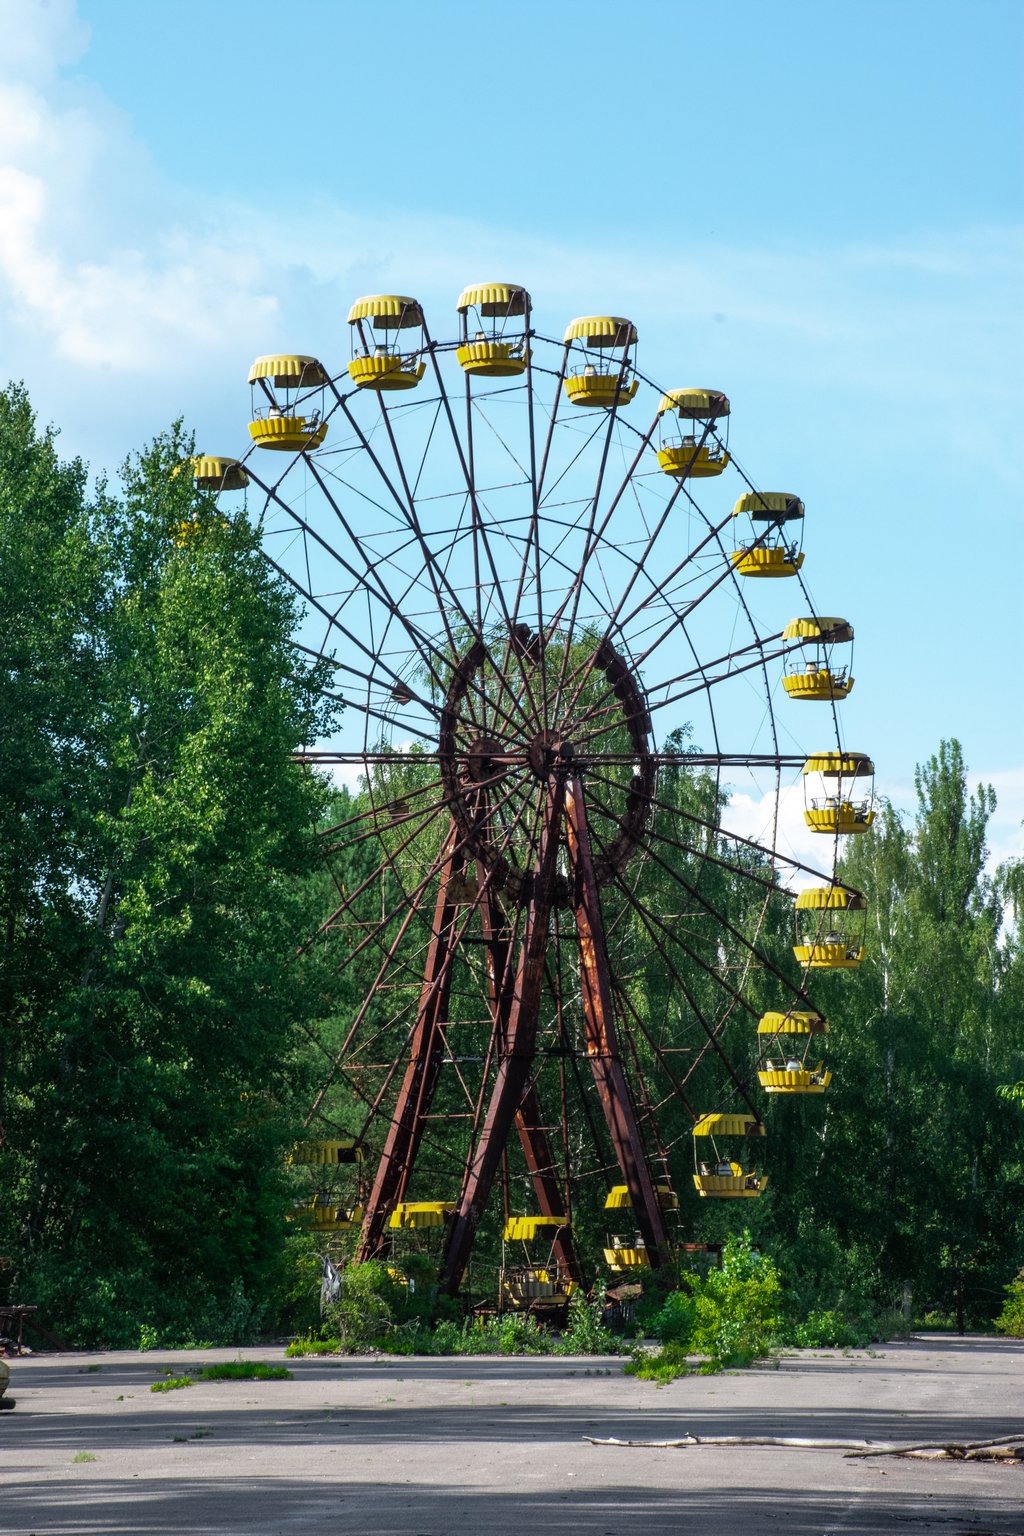 <img src="ferris wheel.png" alt="ferris wheel in pripyat">